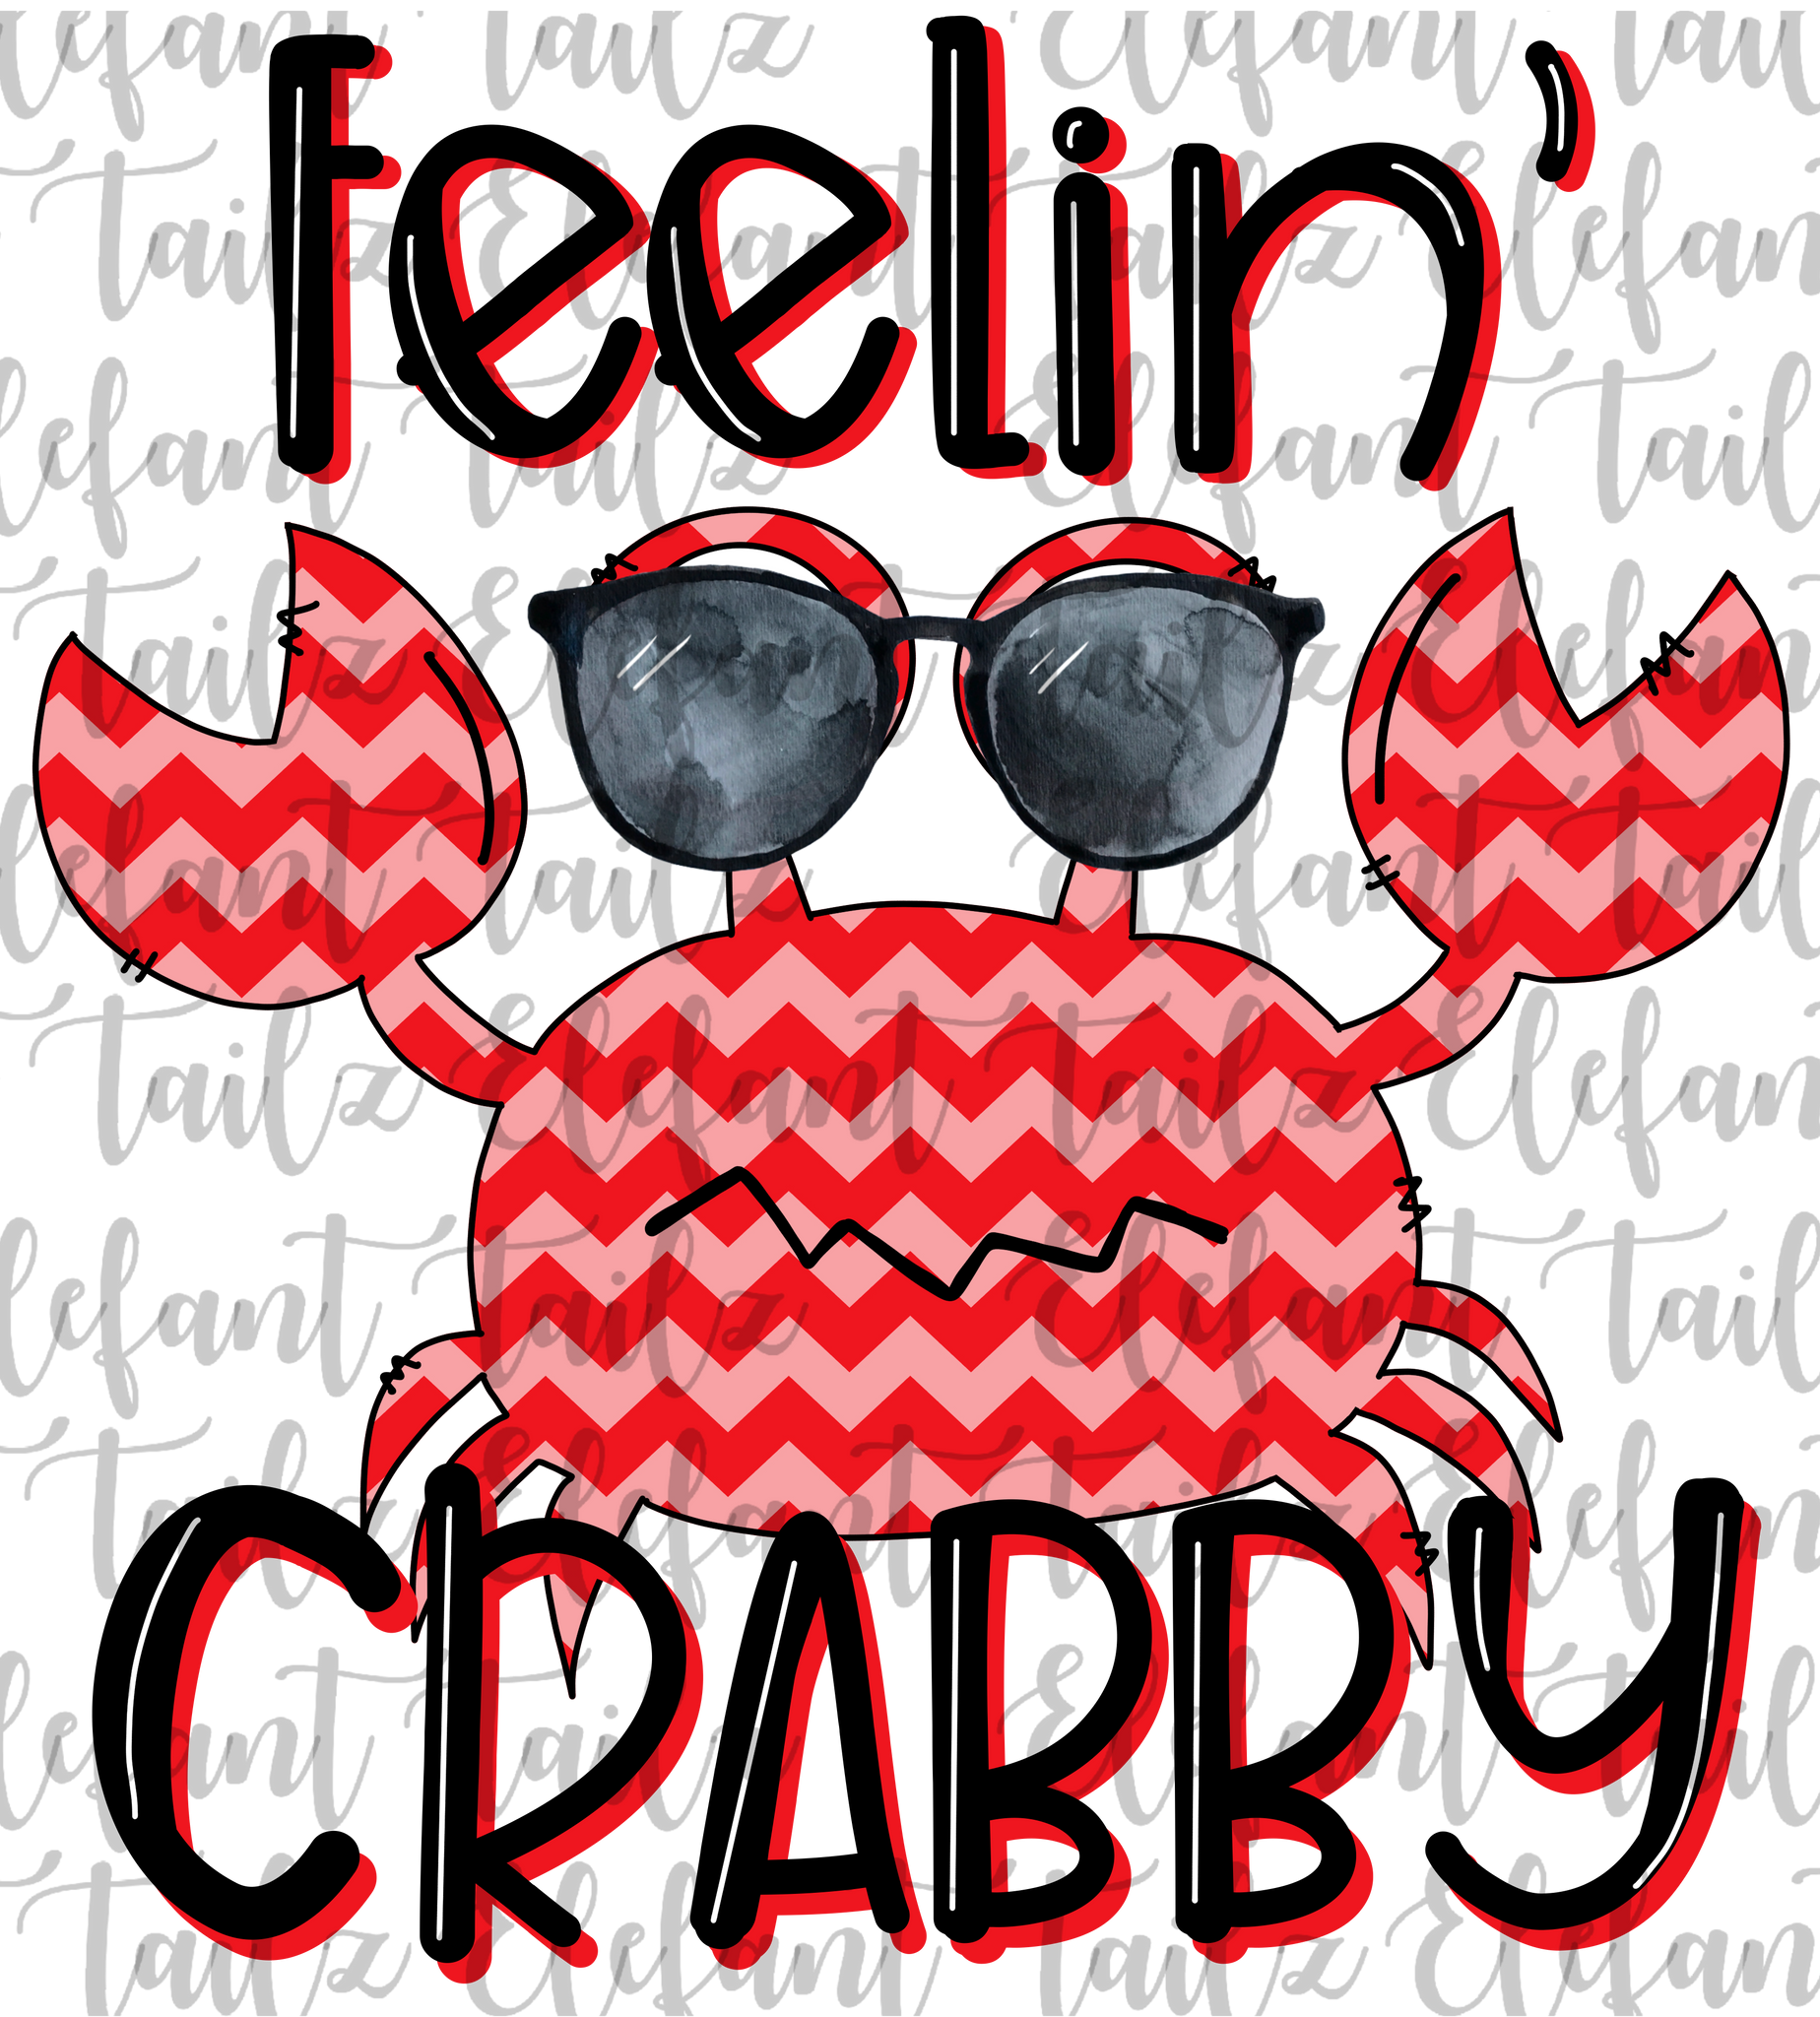 Feelin' Crabby